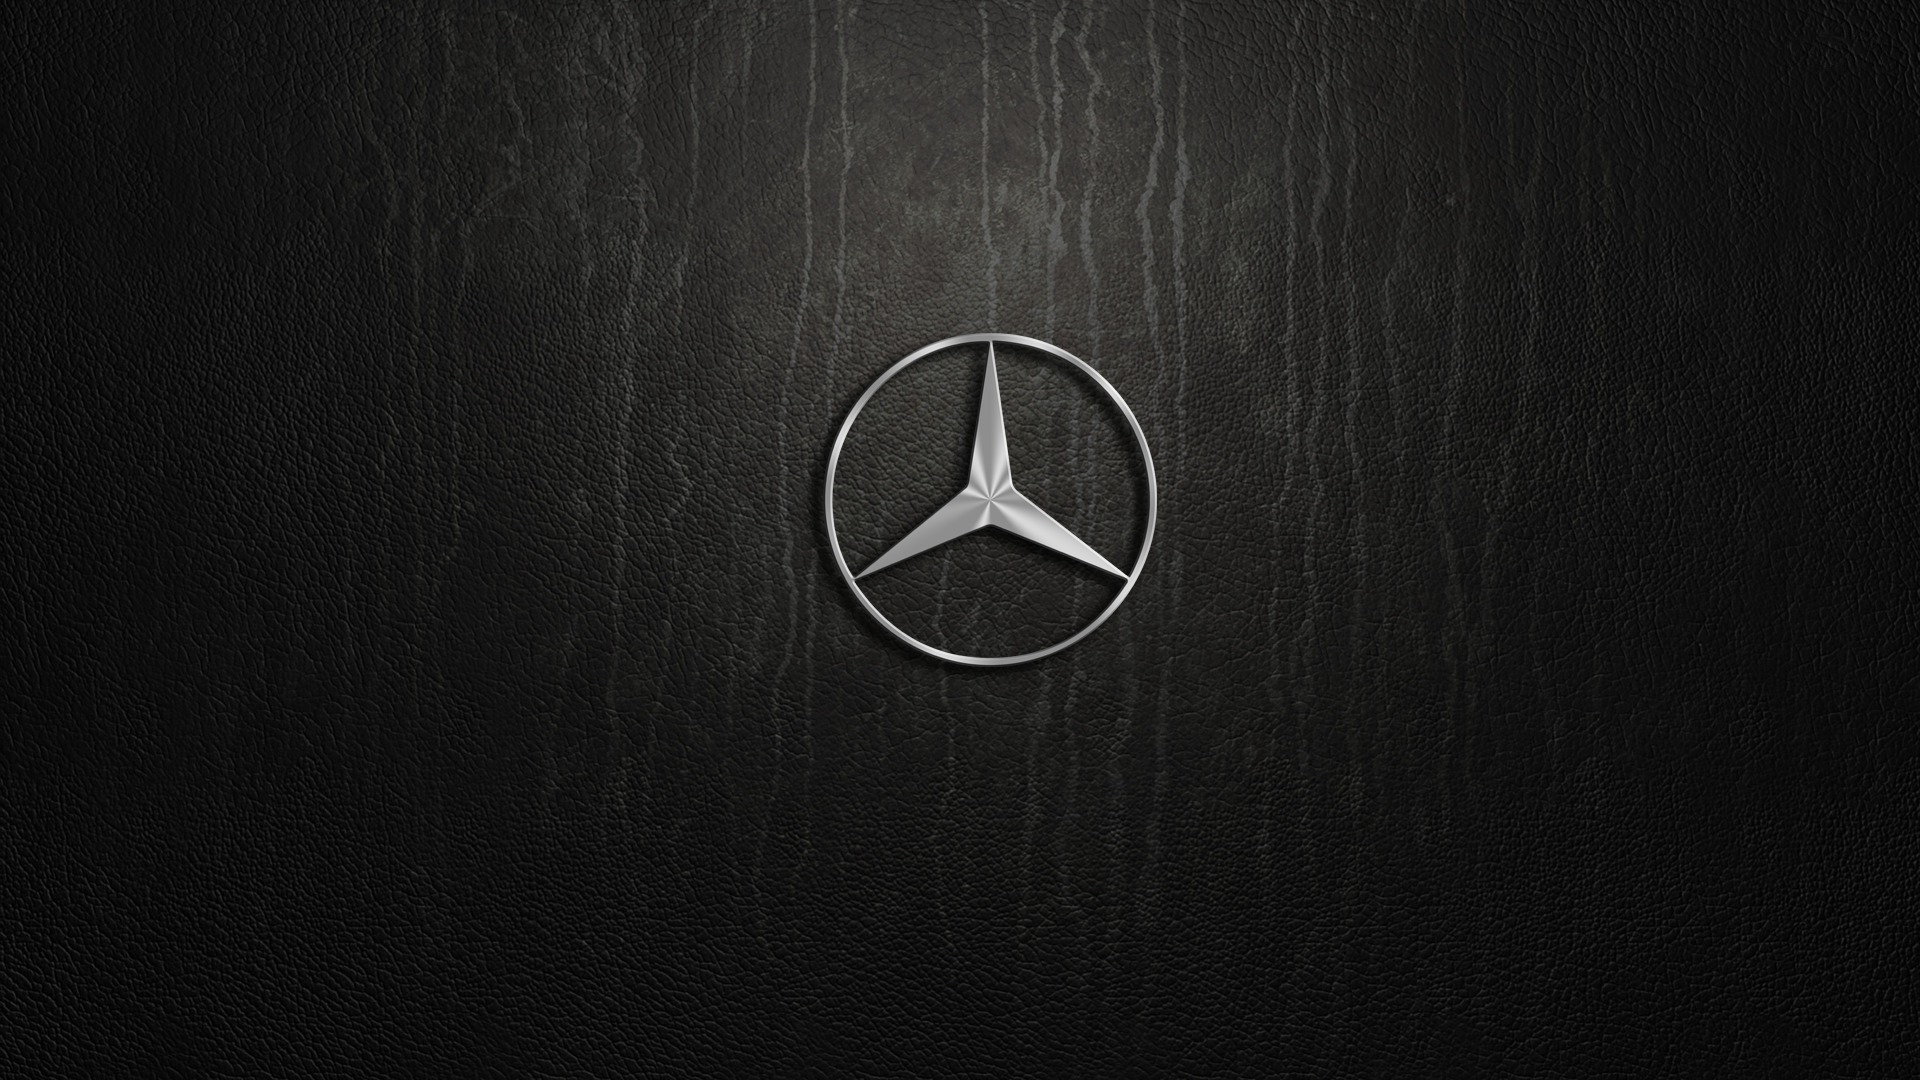 Benz logo Wallpapers Download